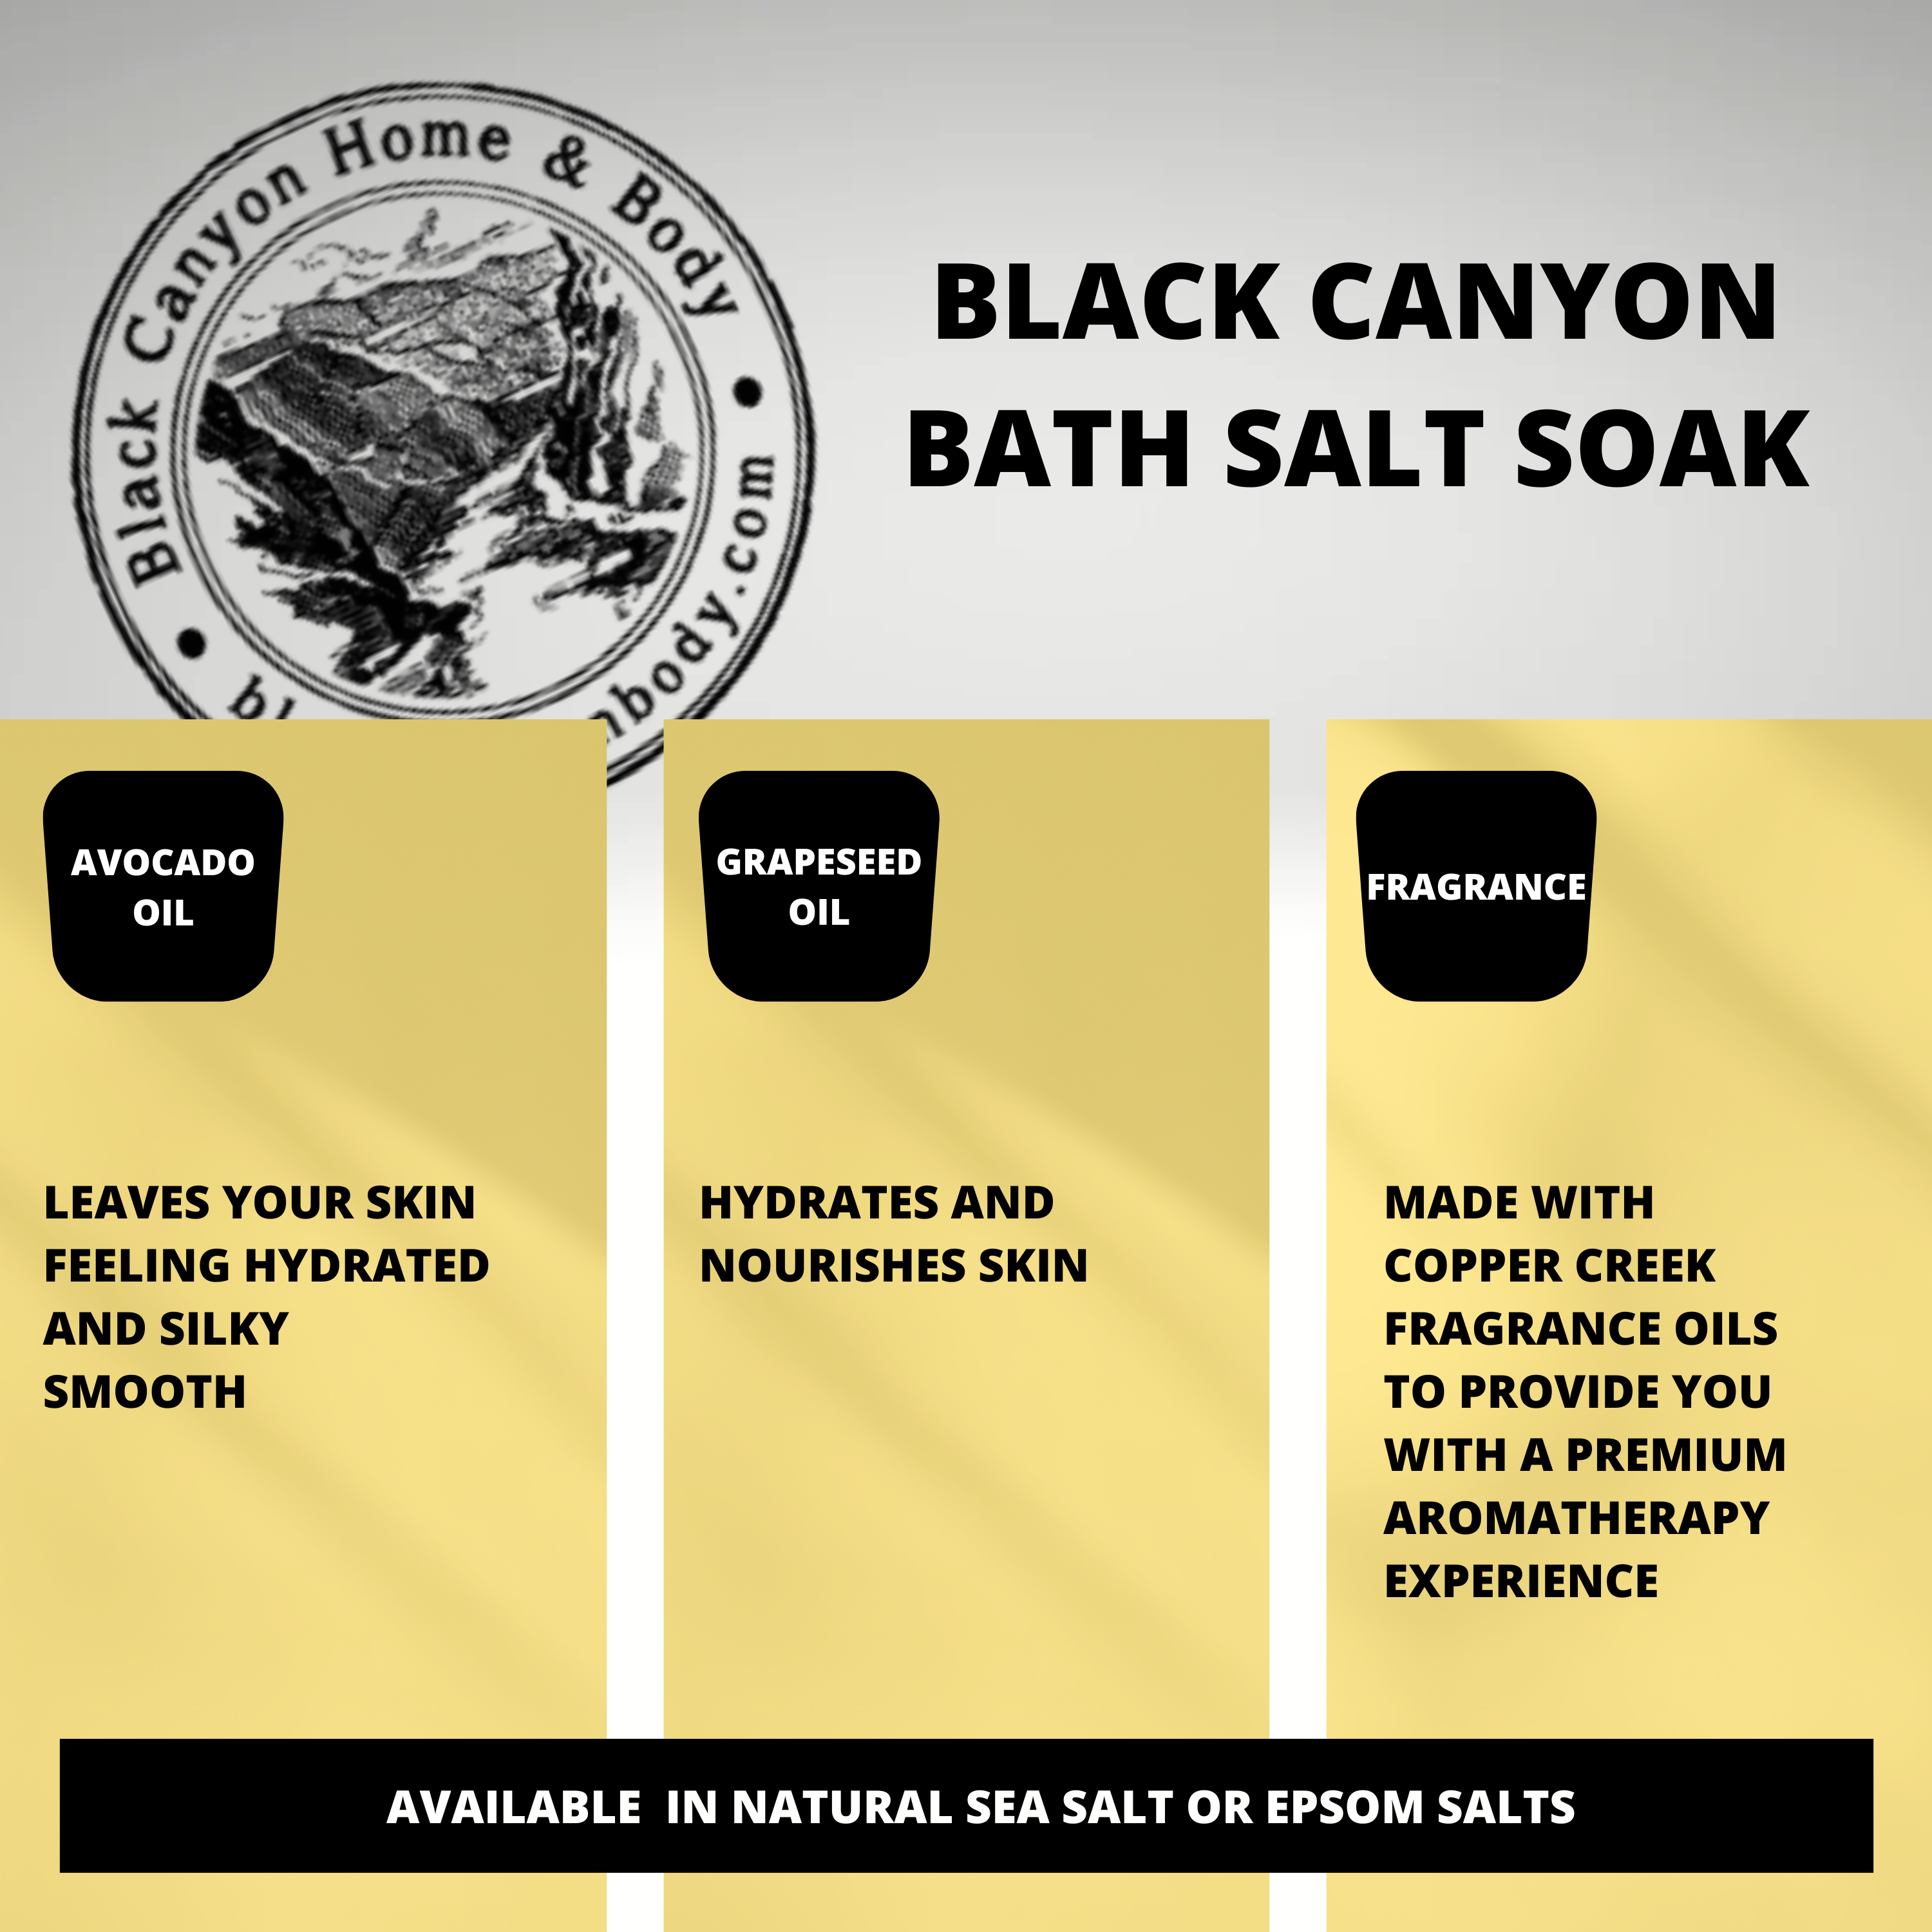 Black Canyon Poinsettia Scented Sea Salt Bath Soak